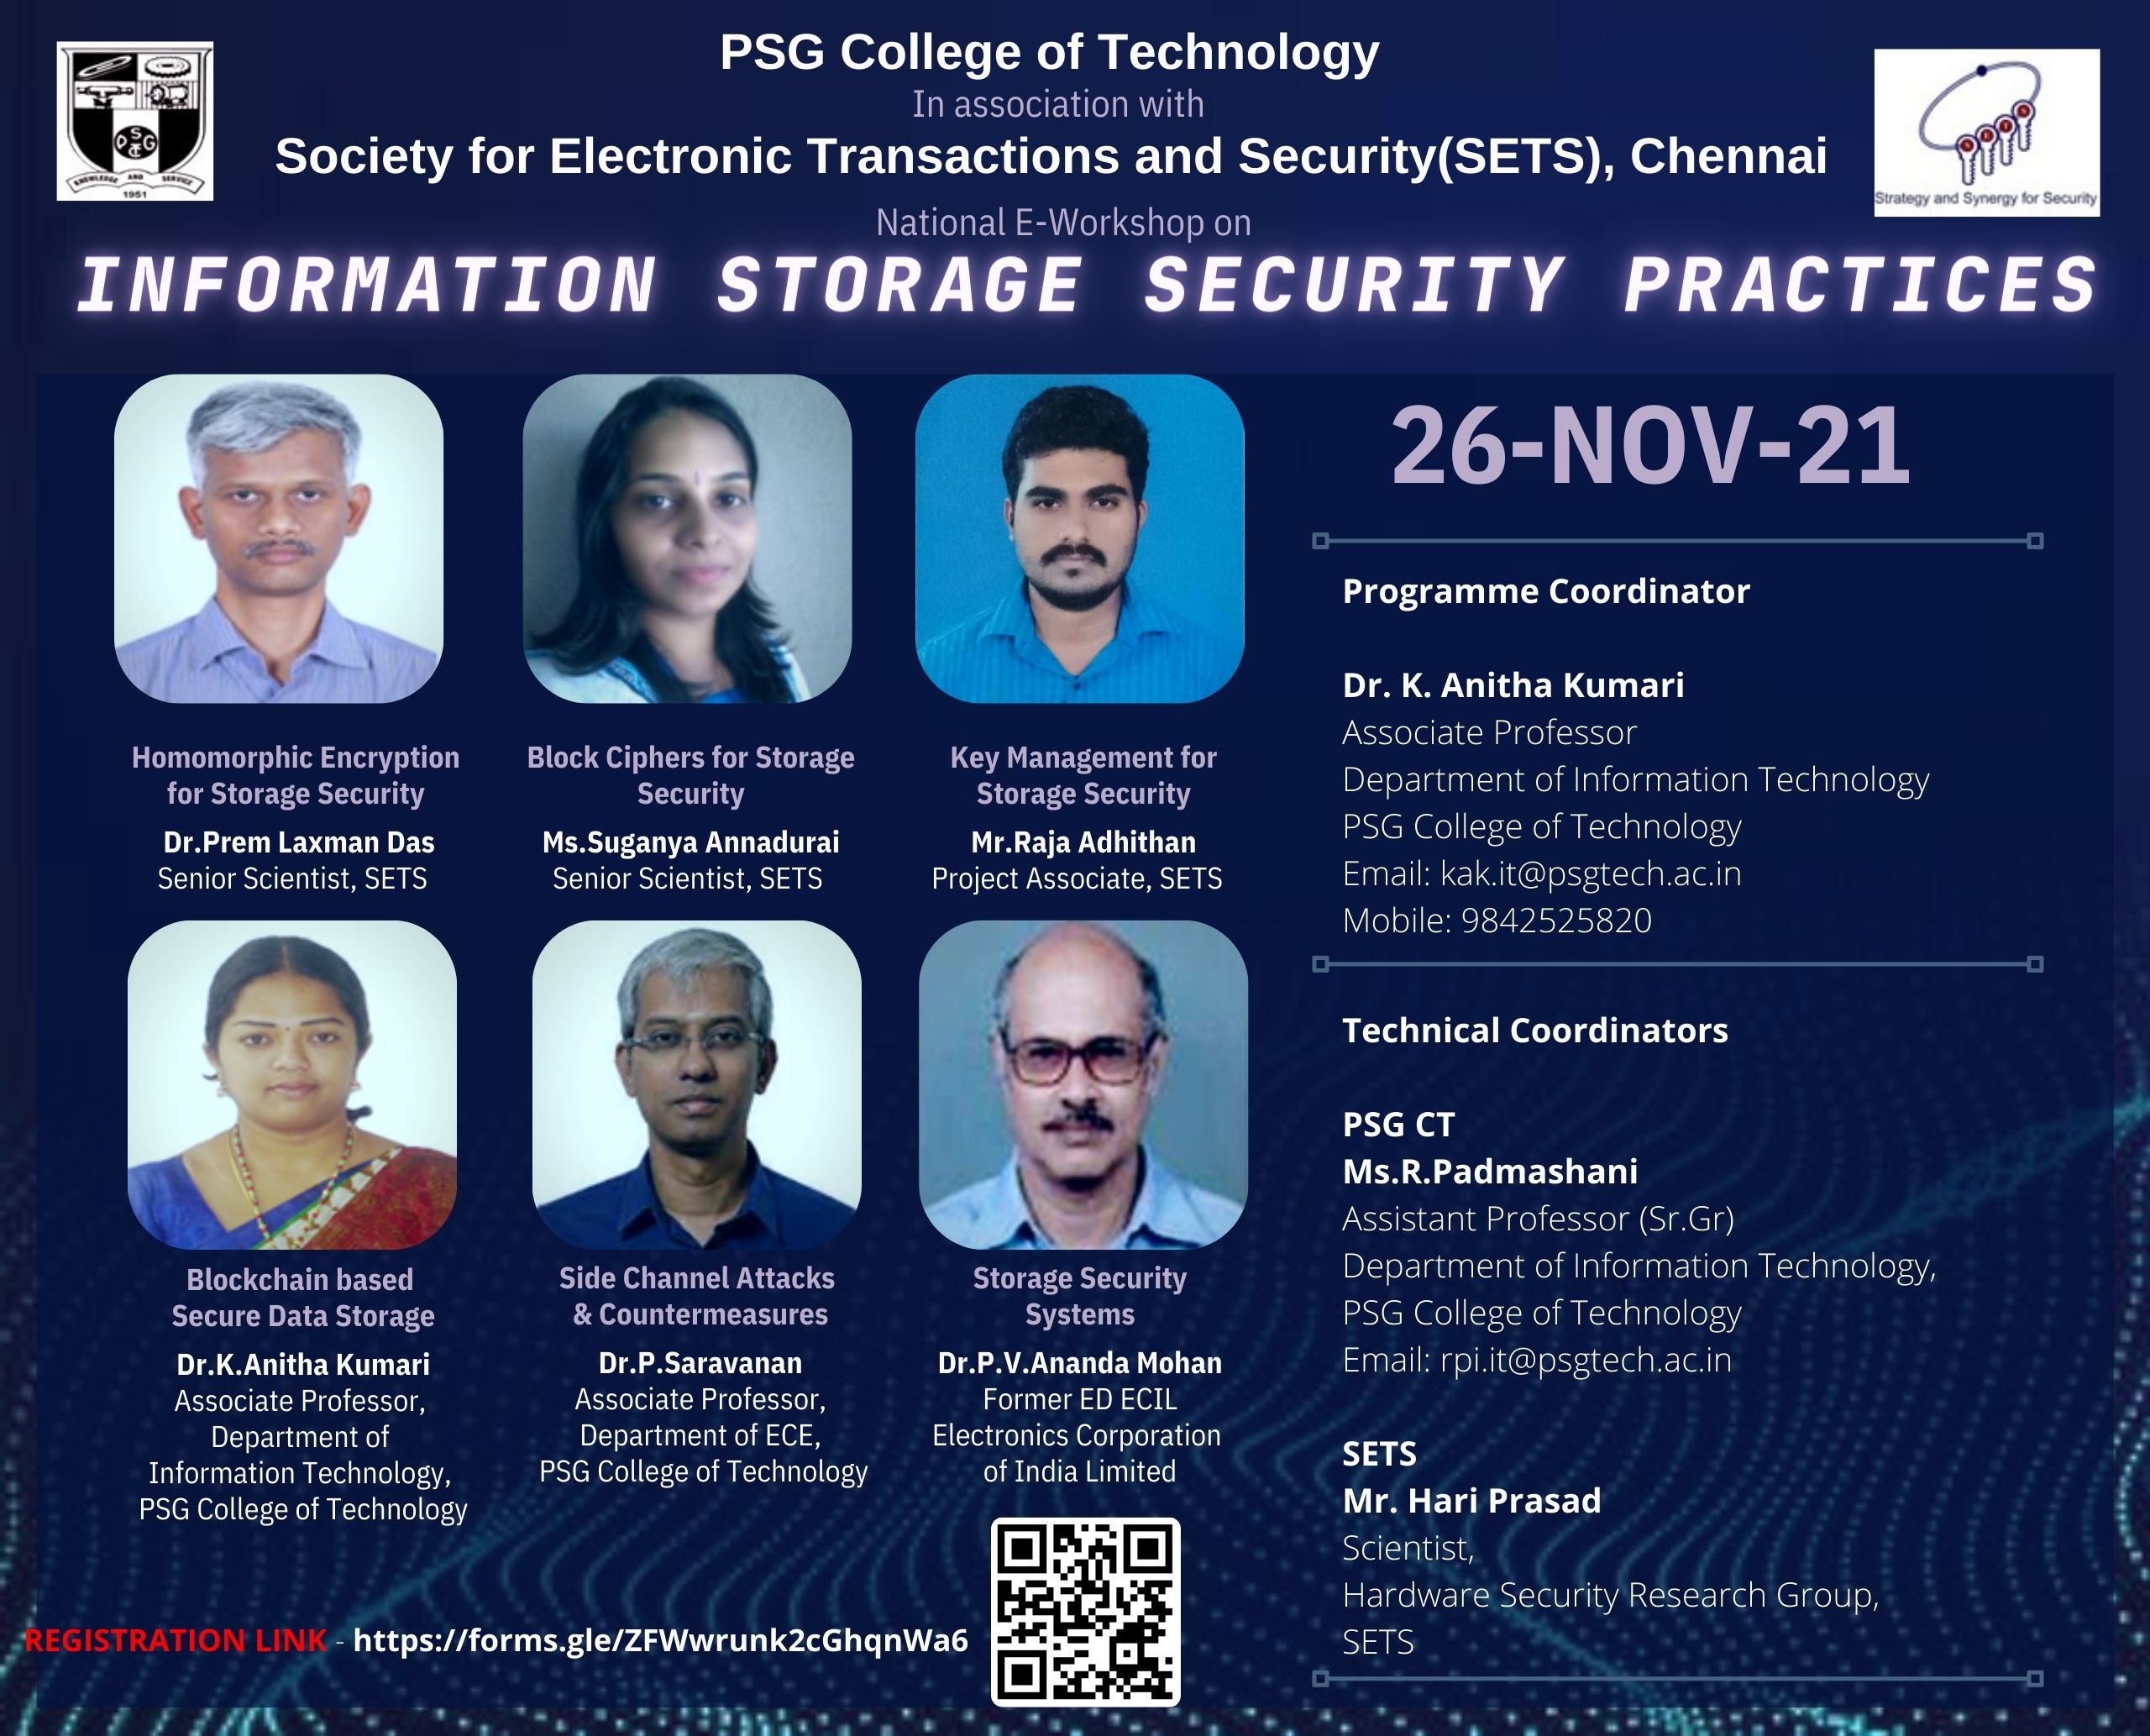 Information Storage Security Practices (ISSP)